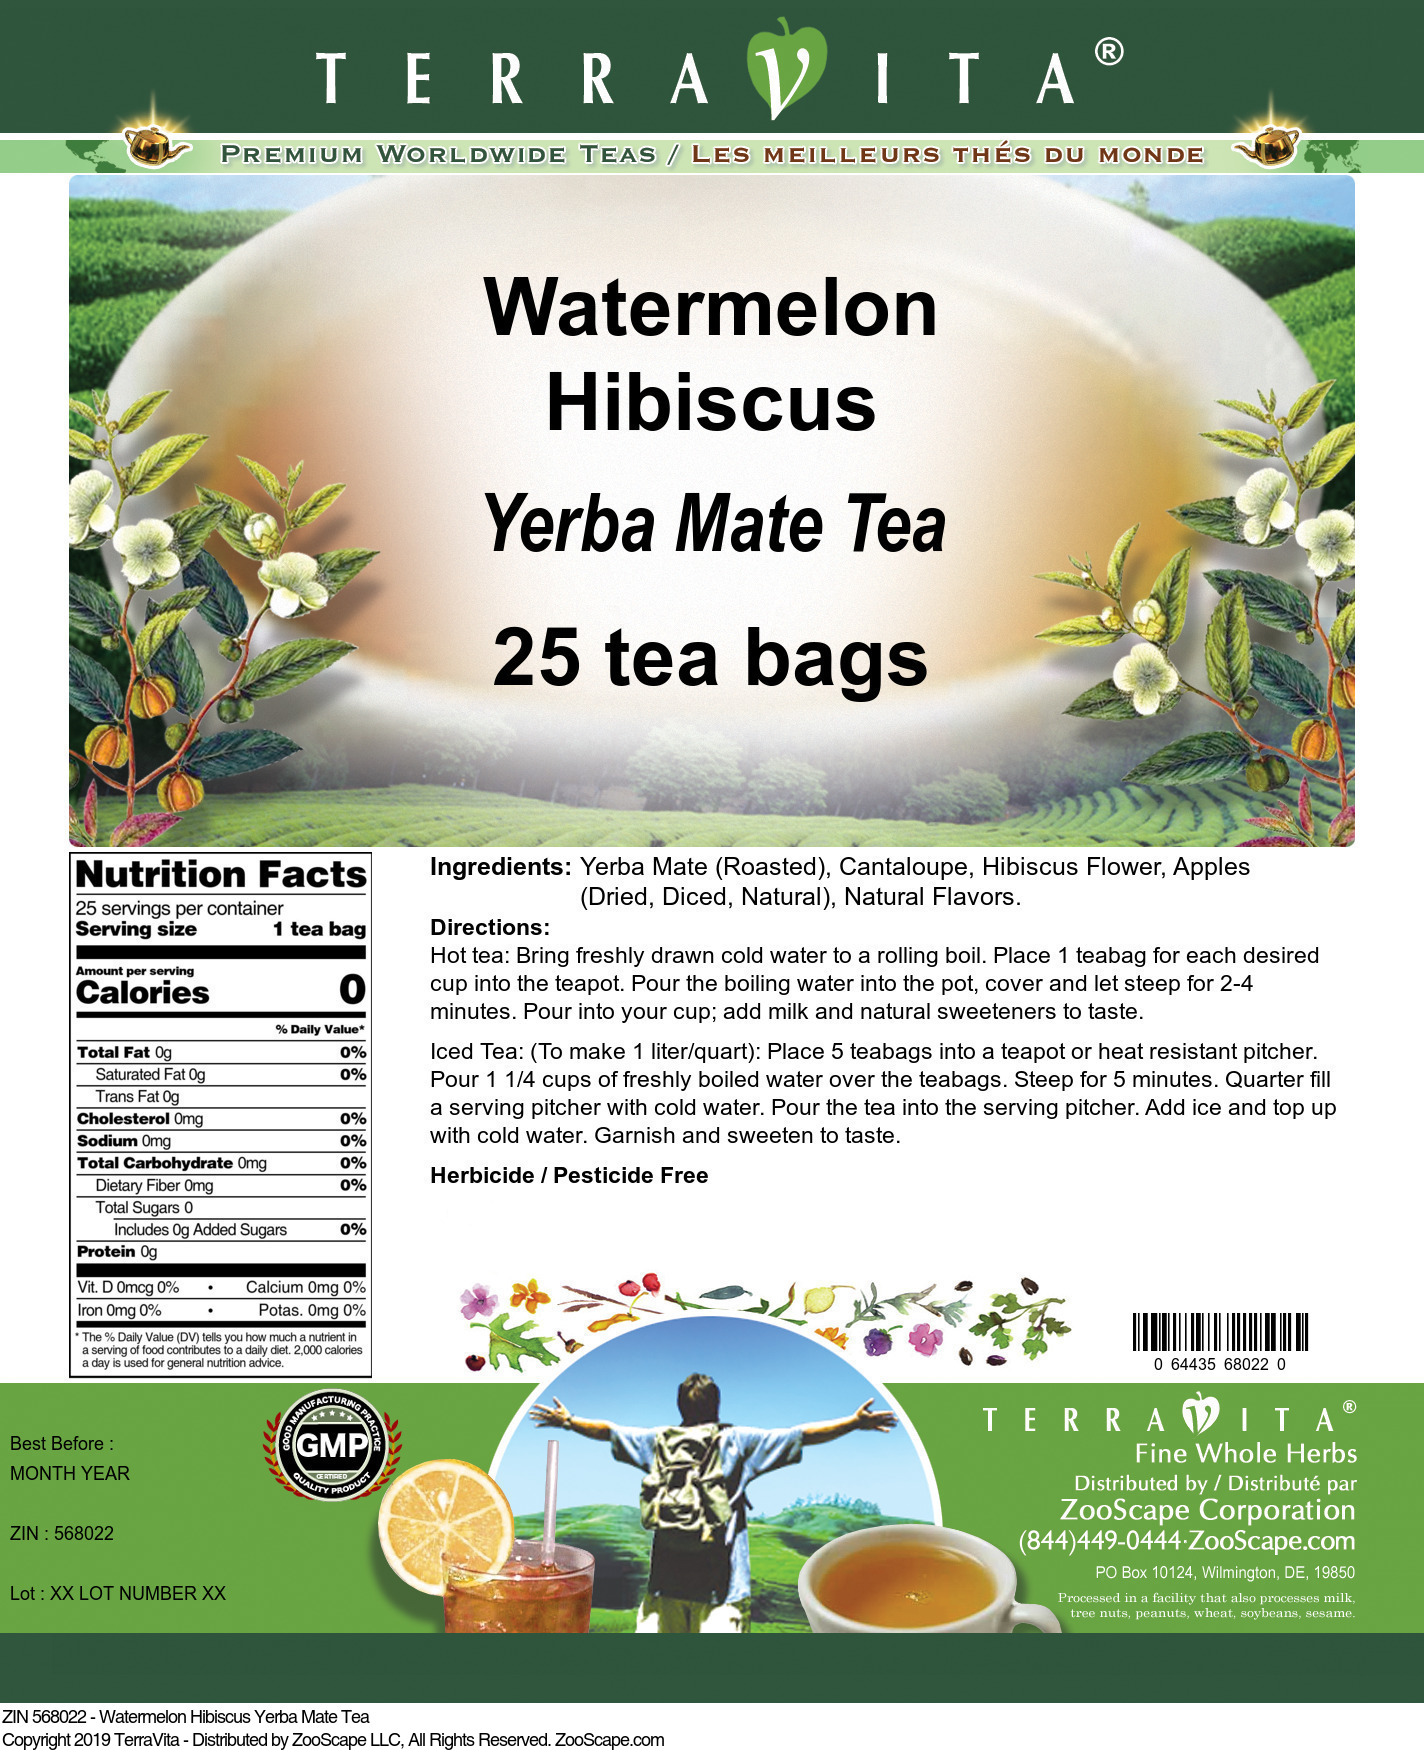 Watermelon Hibiscus Yerba Mate Tea - Label